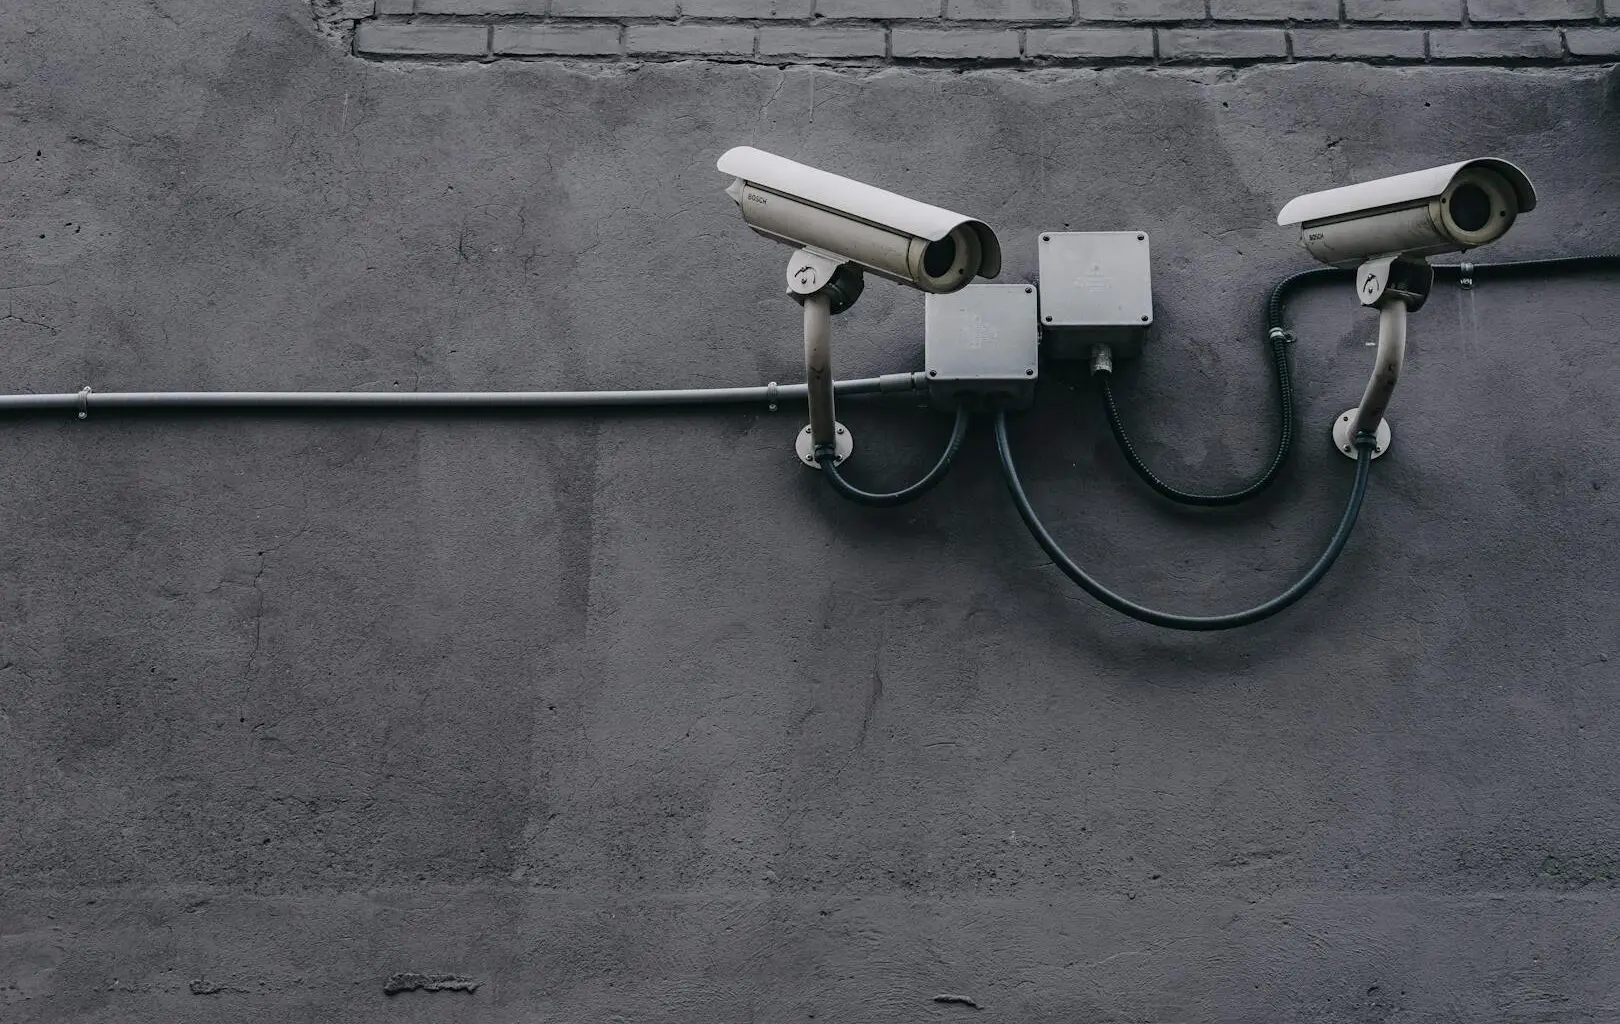 An image of surveillance cameras representing crypto privacy coins.